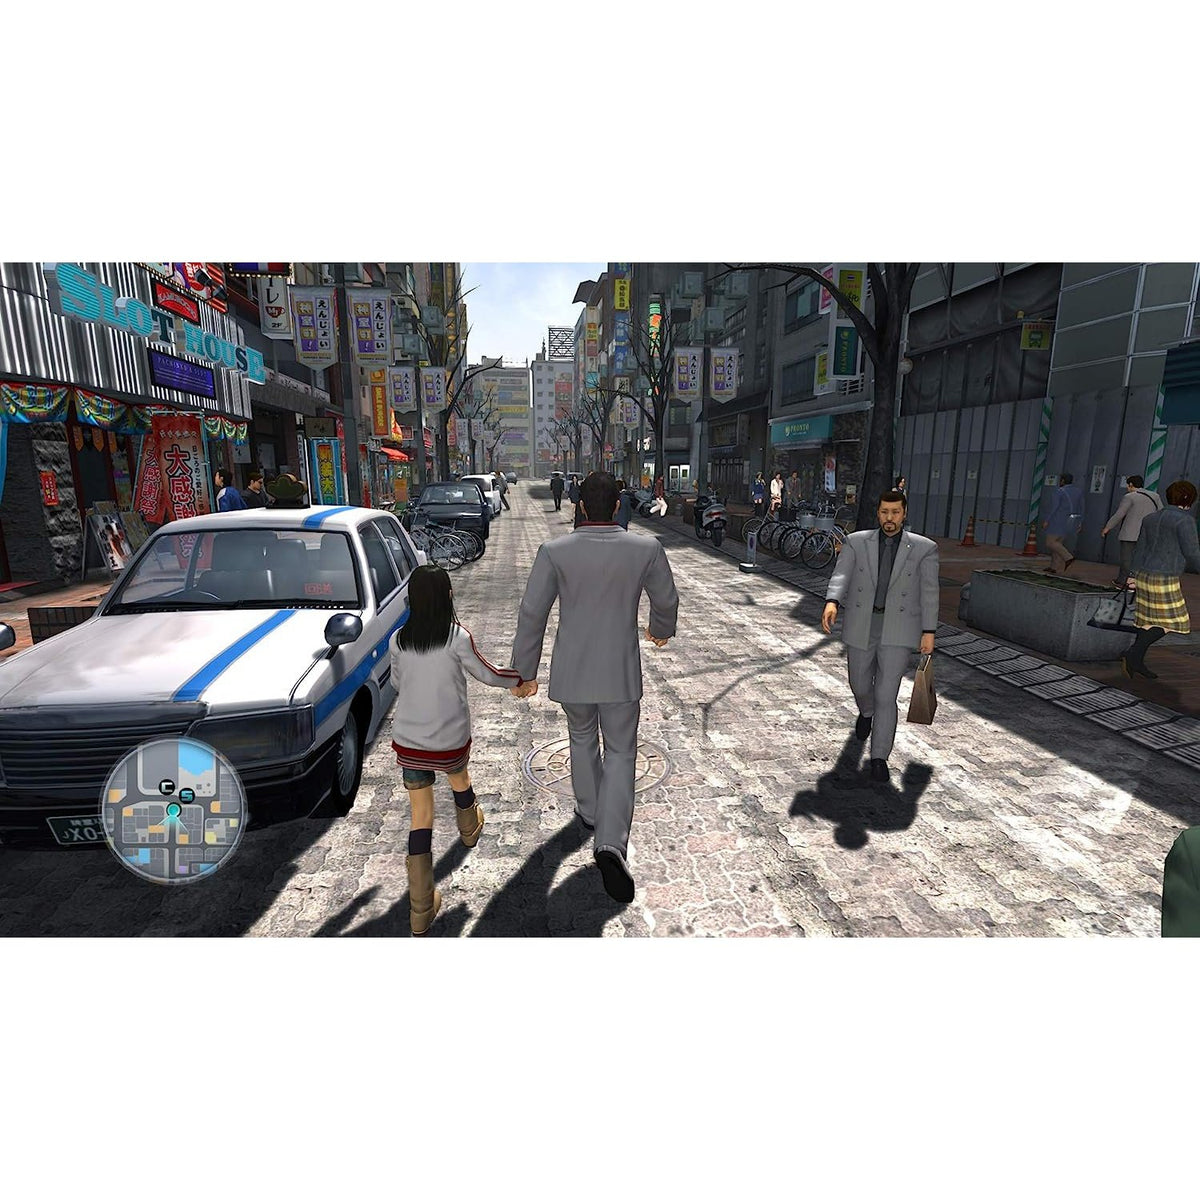 Yakuza Remastered Collection Sony PlayStation 4